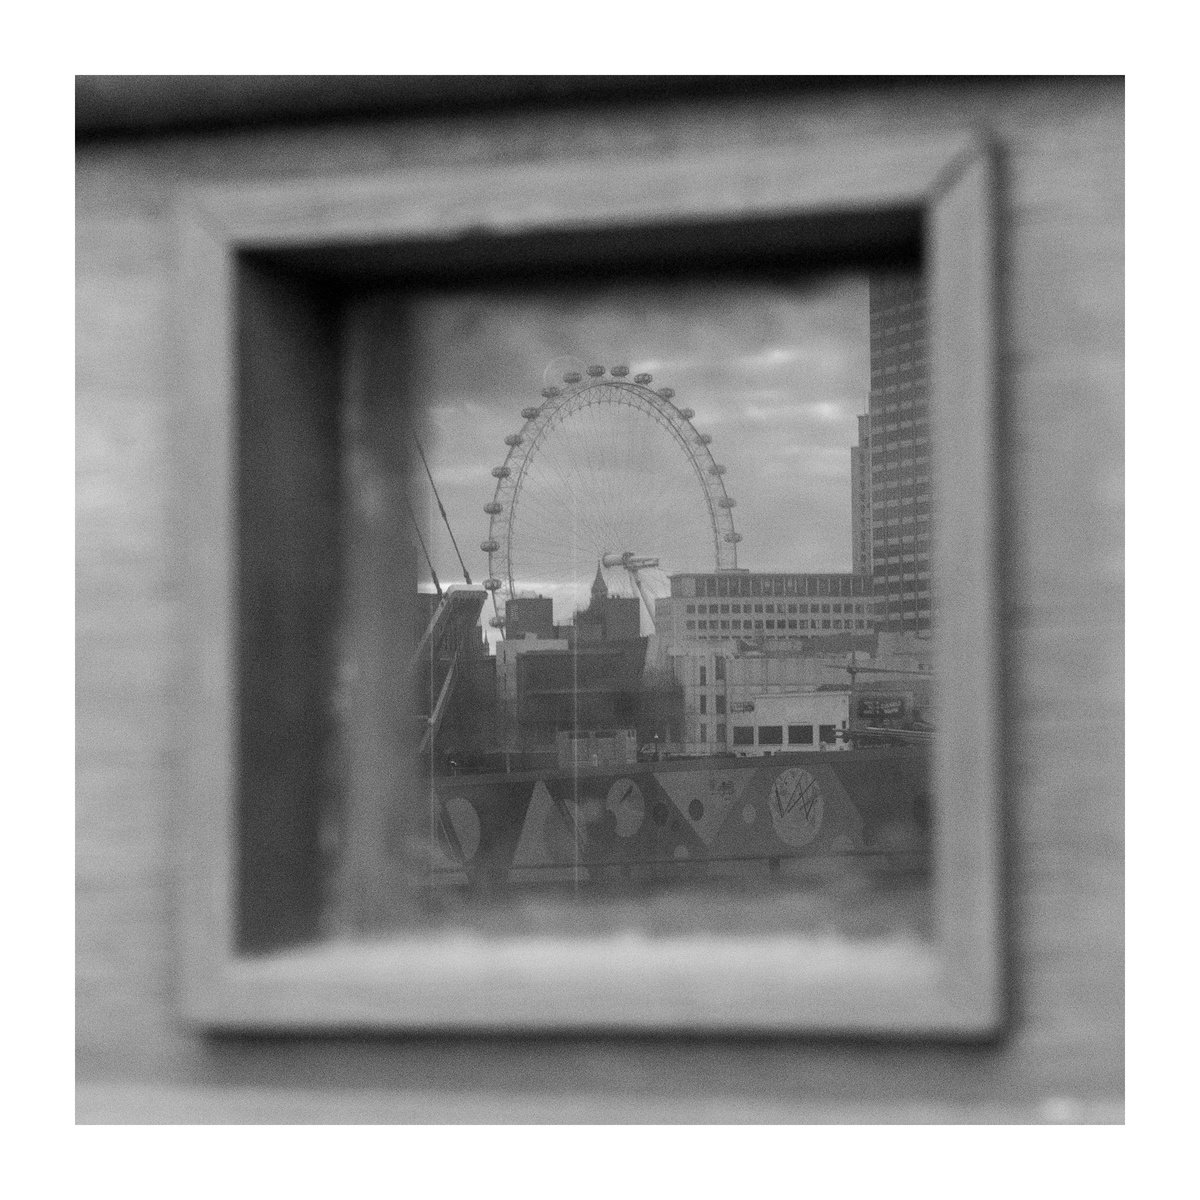 LONDON #014 by Pawel Zoladek